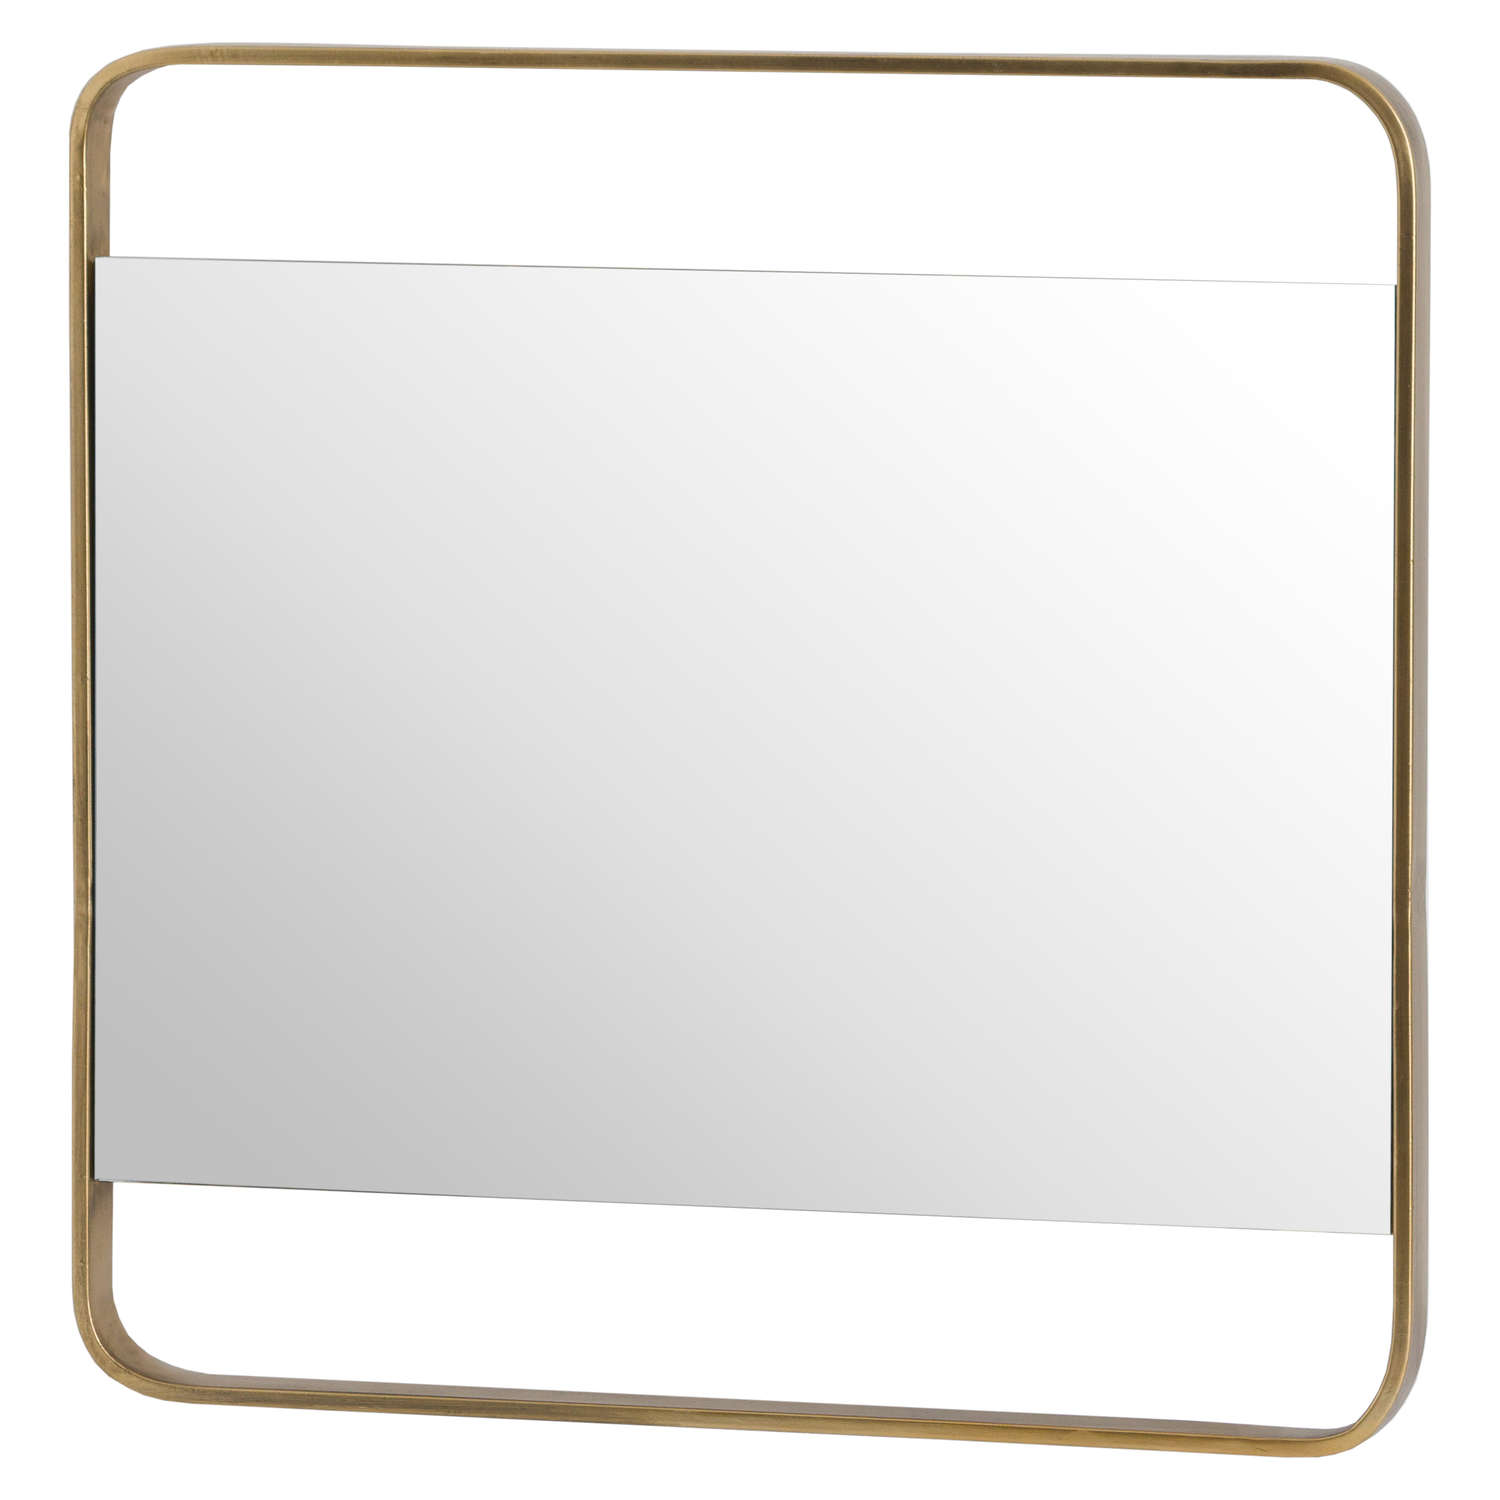 Retro Square Framed Bronze Mirror